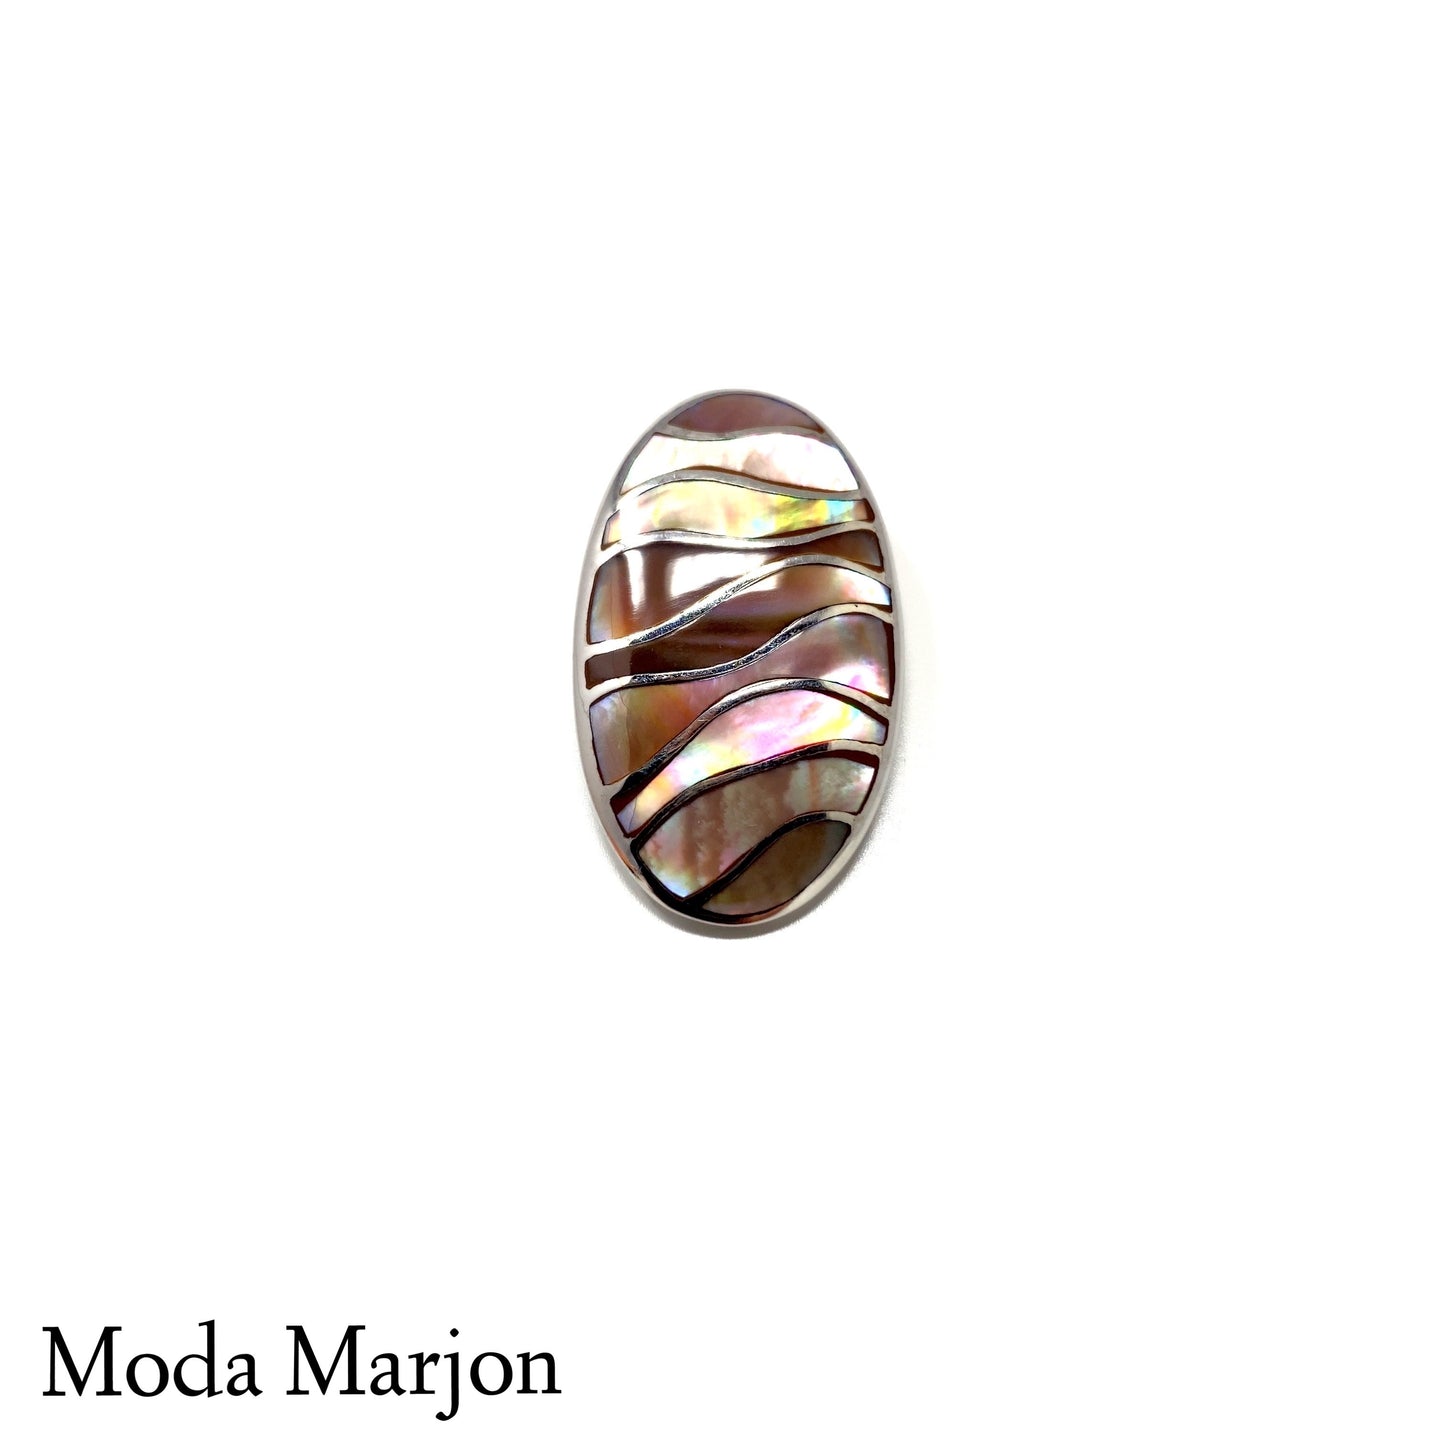 Mosaic Inlay Multi-shades Of Mother-Of-Pearl Pendant - Moda Marjon 